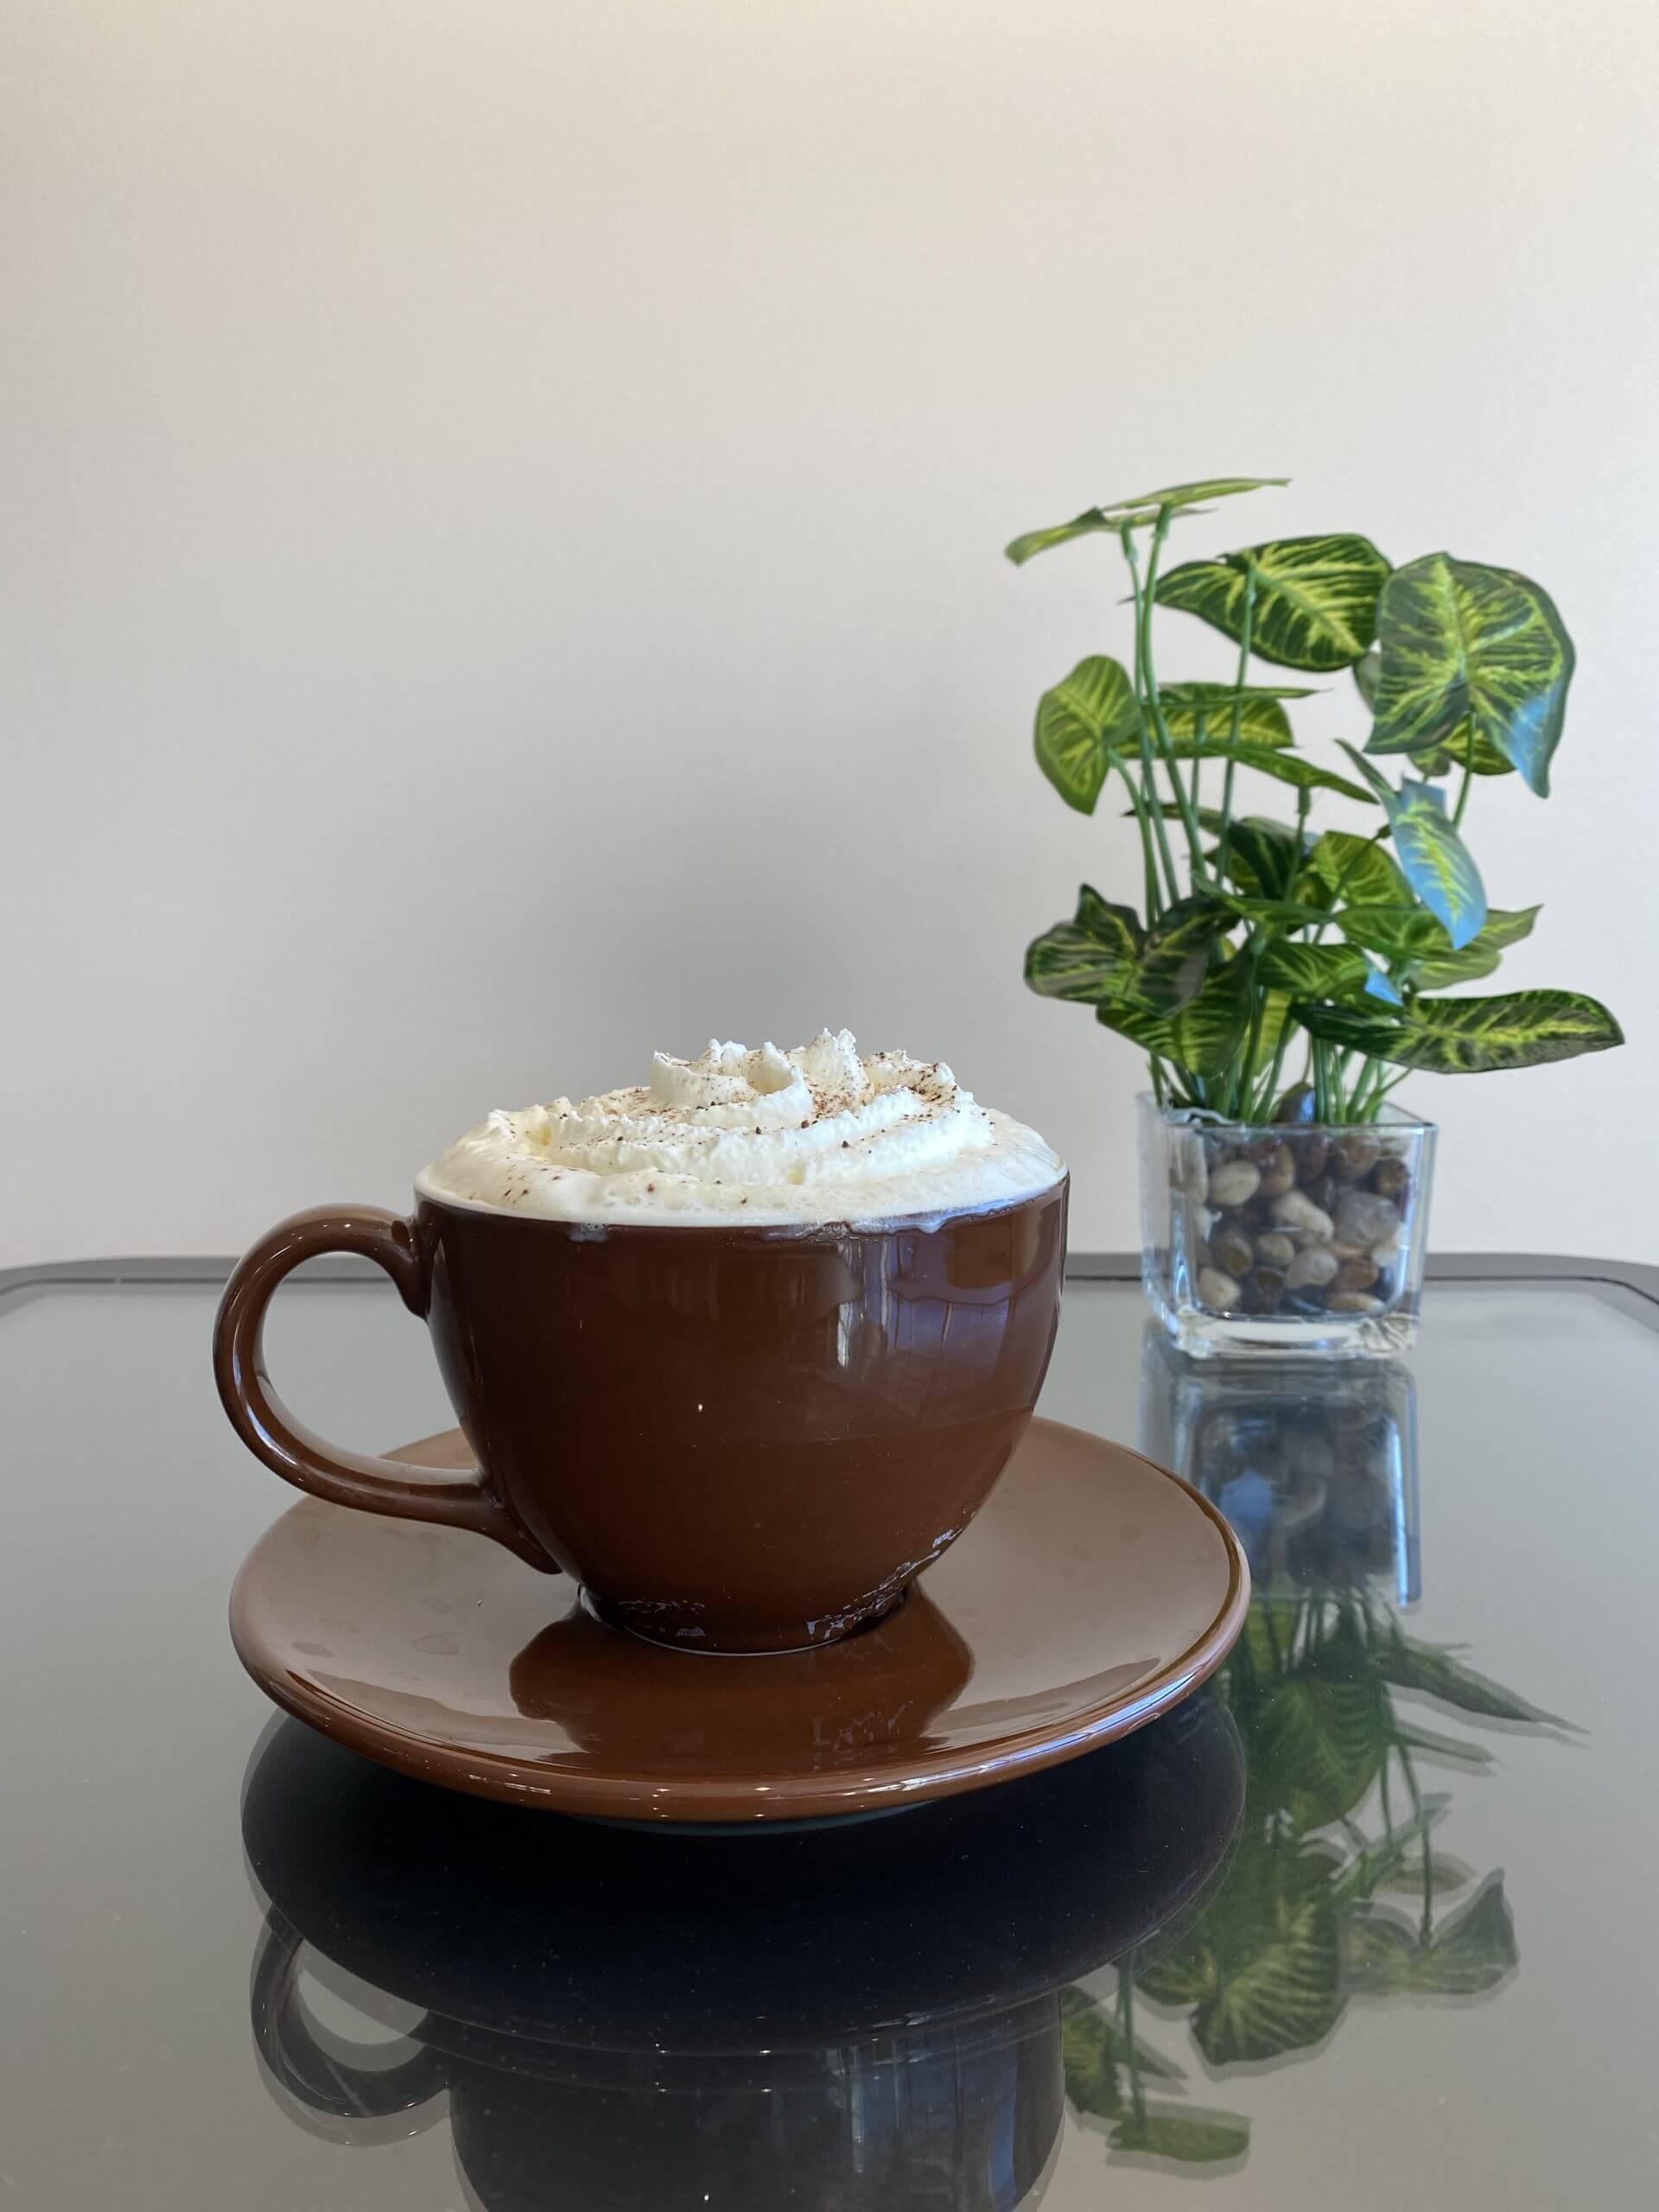 https://cupofdreamscoffeeandtea.com/wp-content/uploads/2022/01/lattee-whiped-cream.jpg